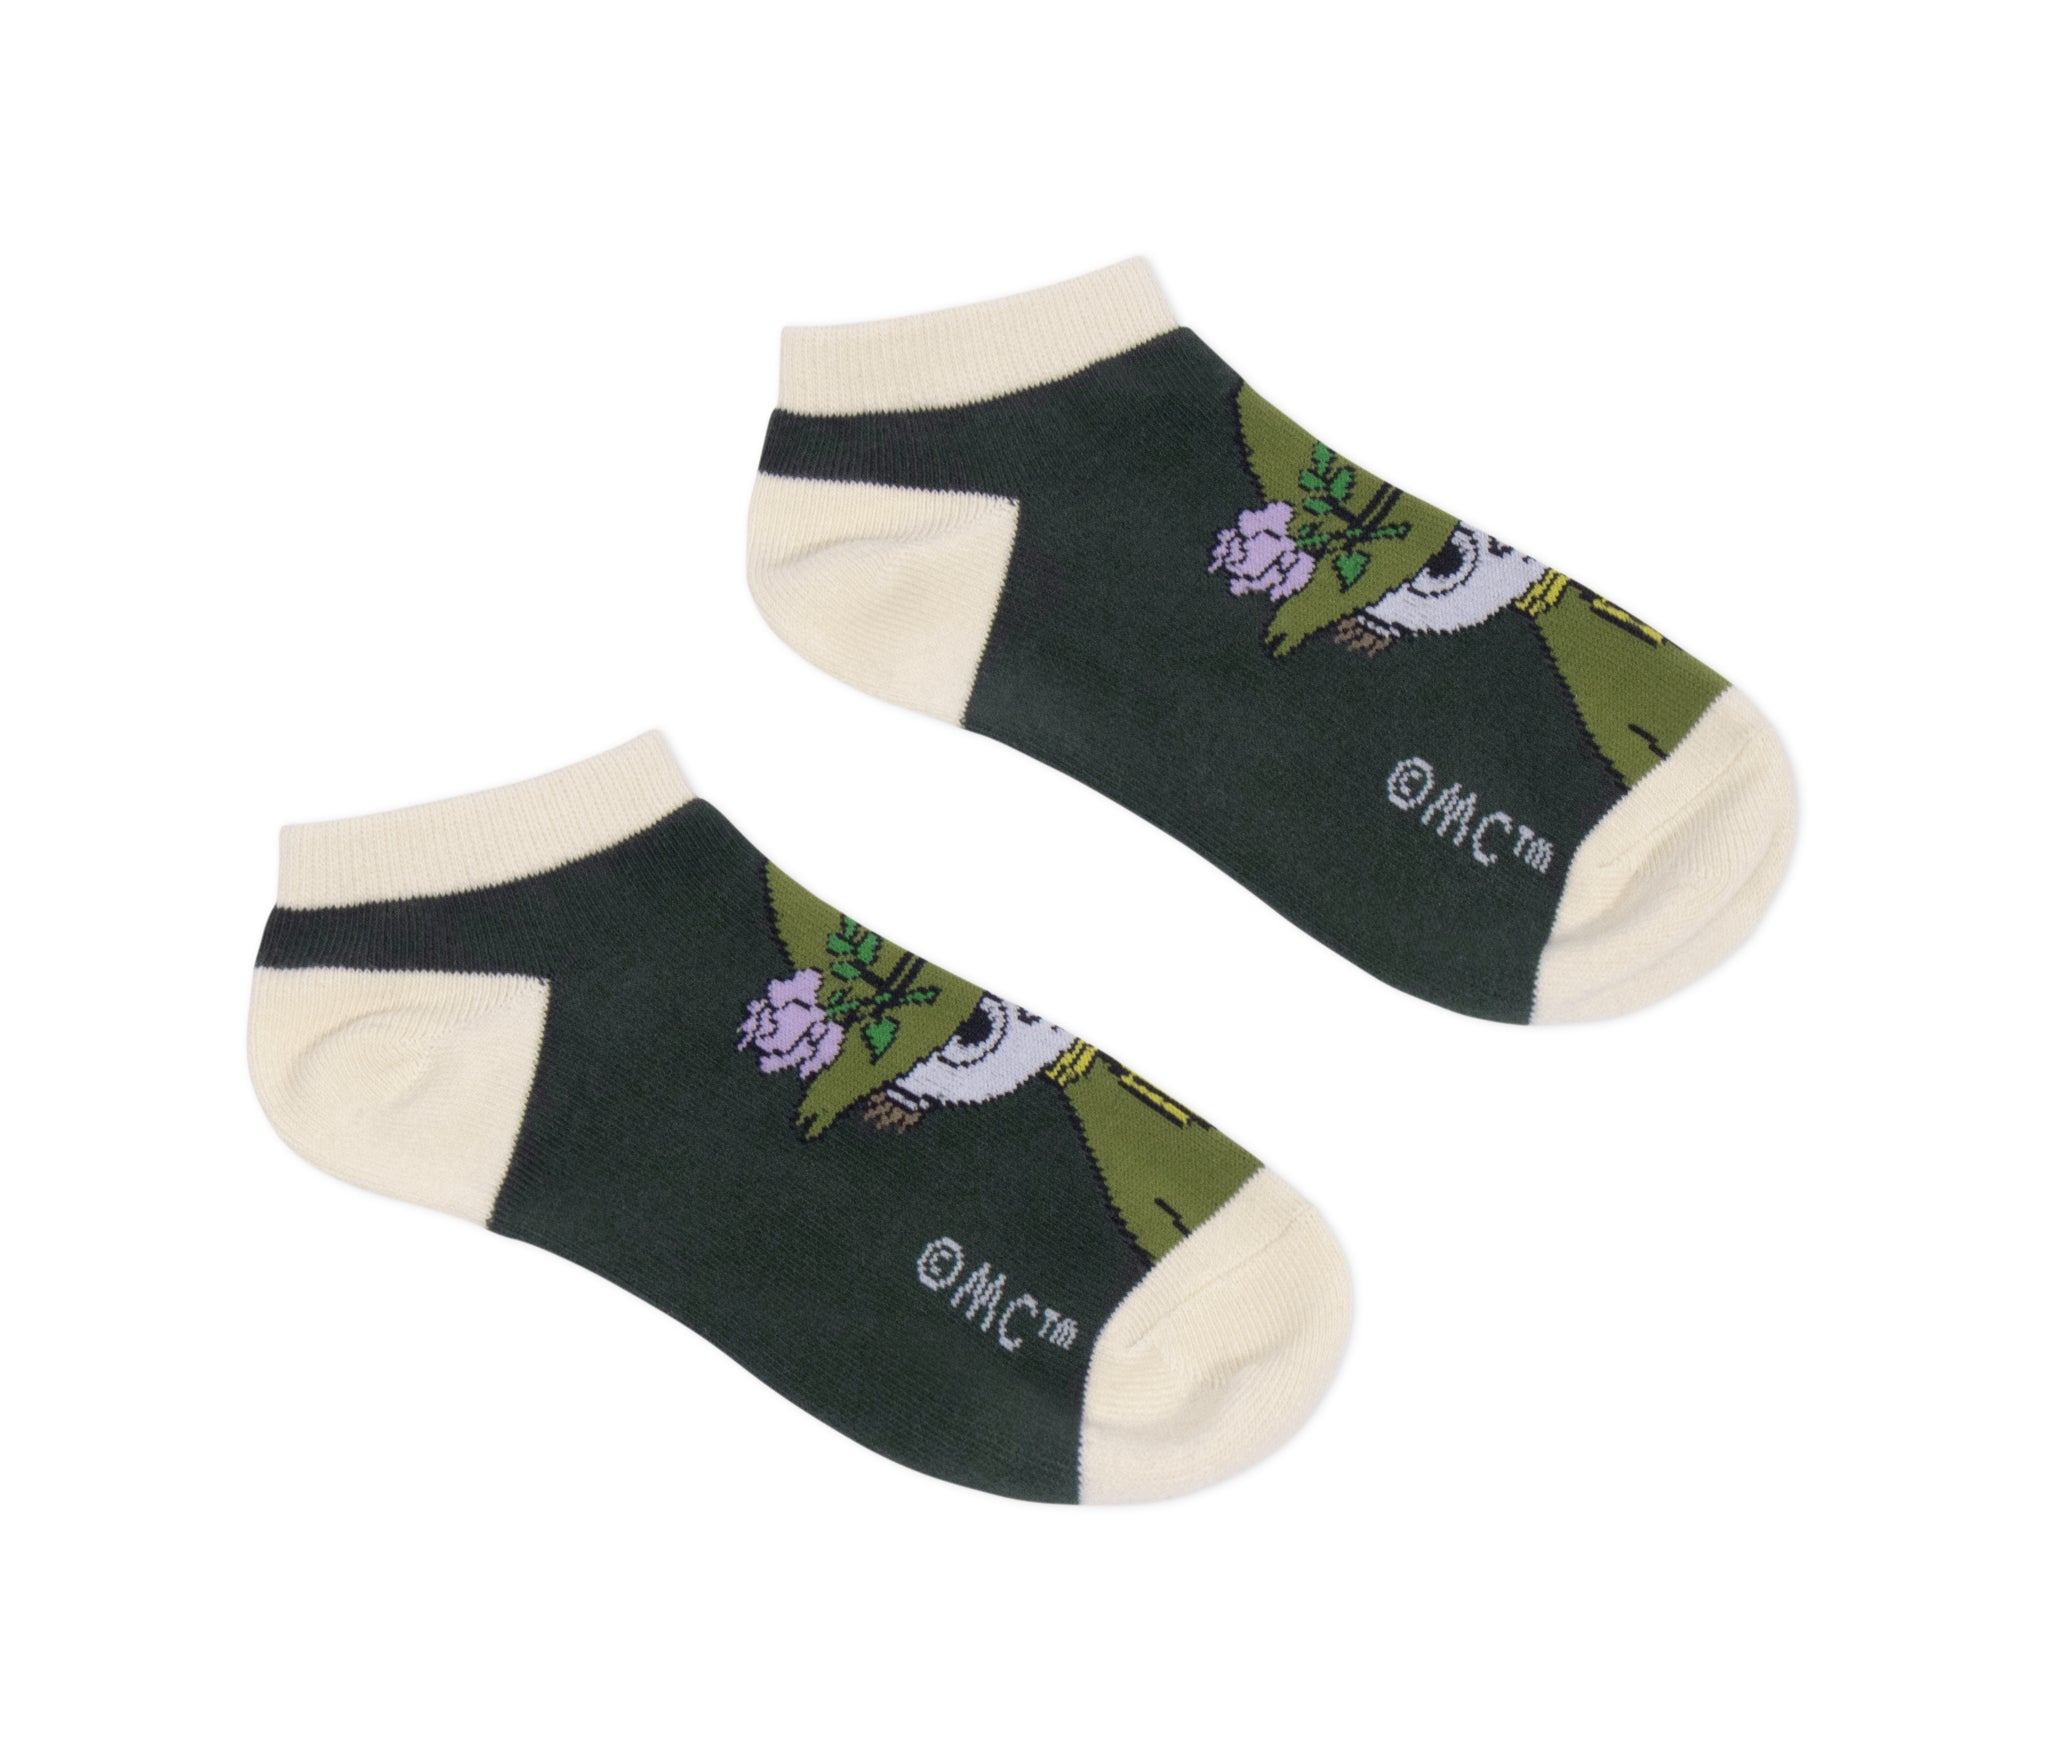 Snufkin Adventure Ladies Ankle Socks - Green